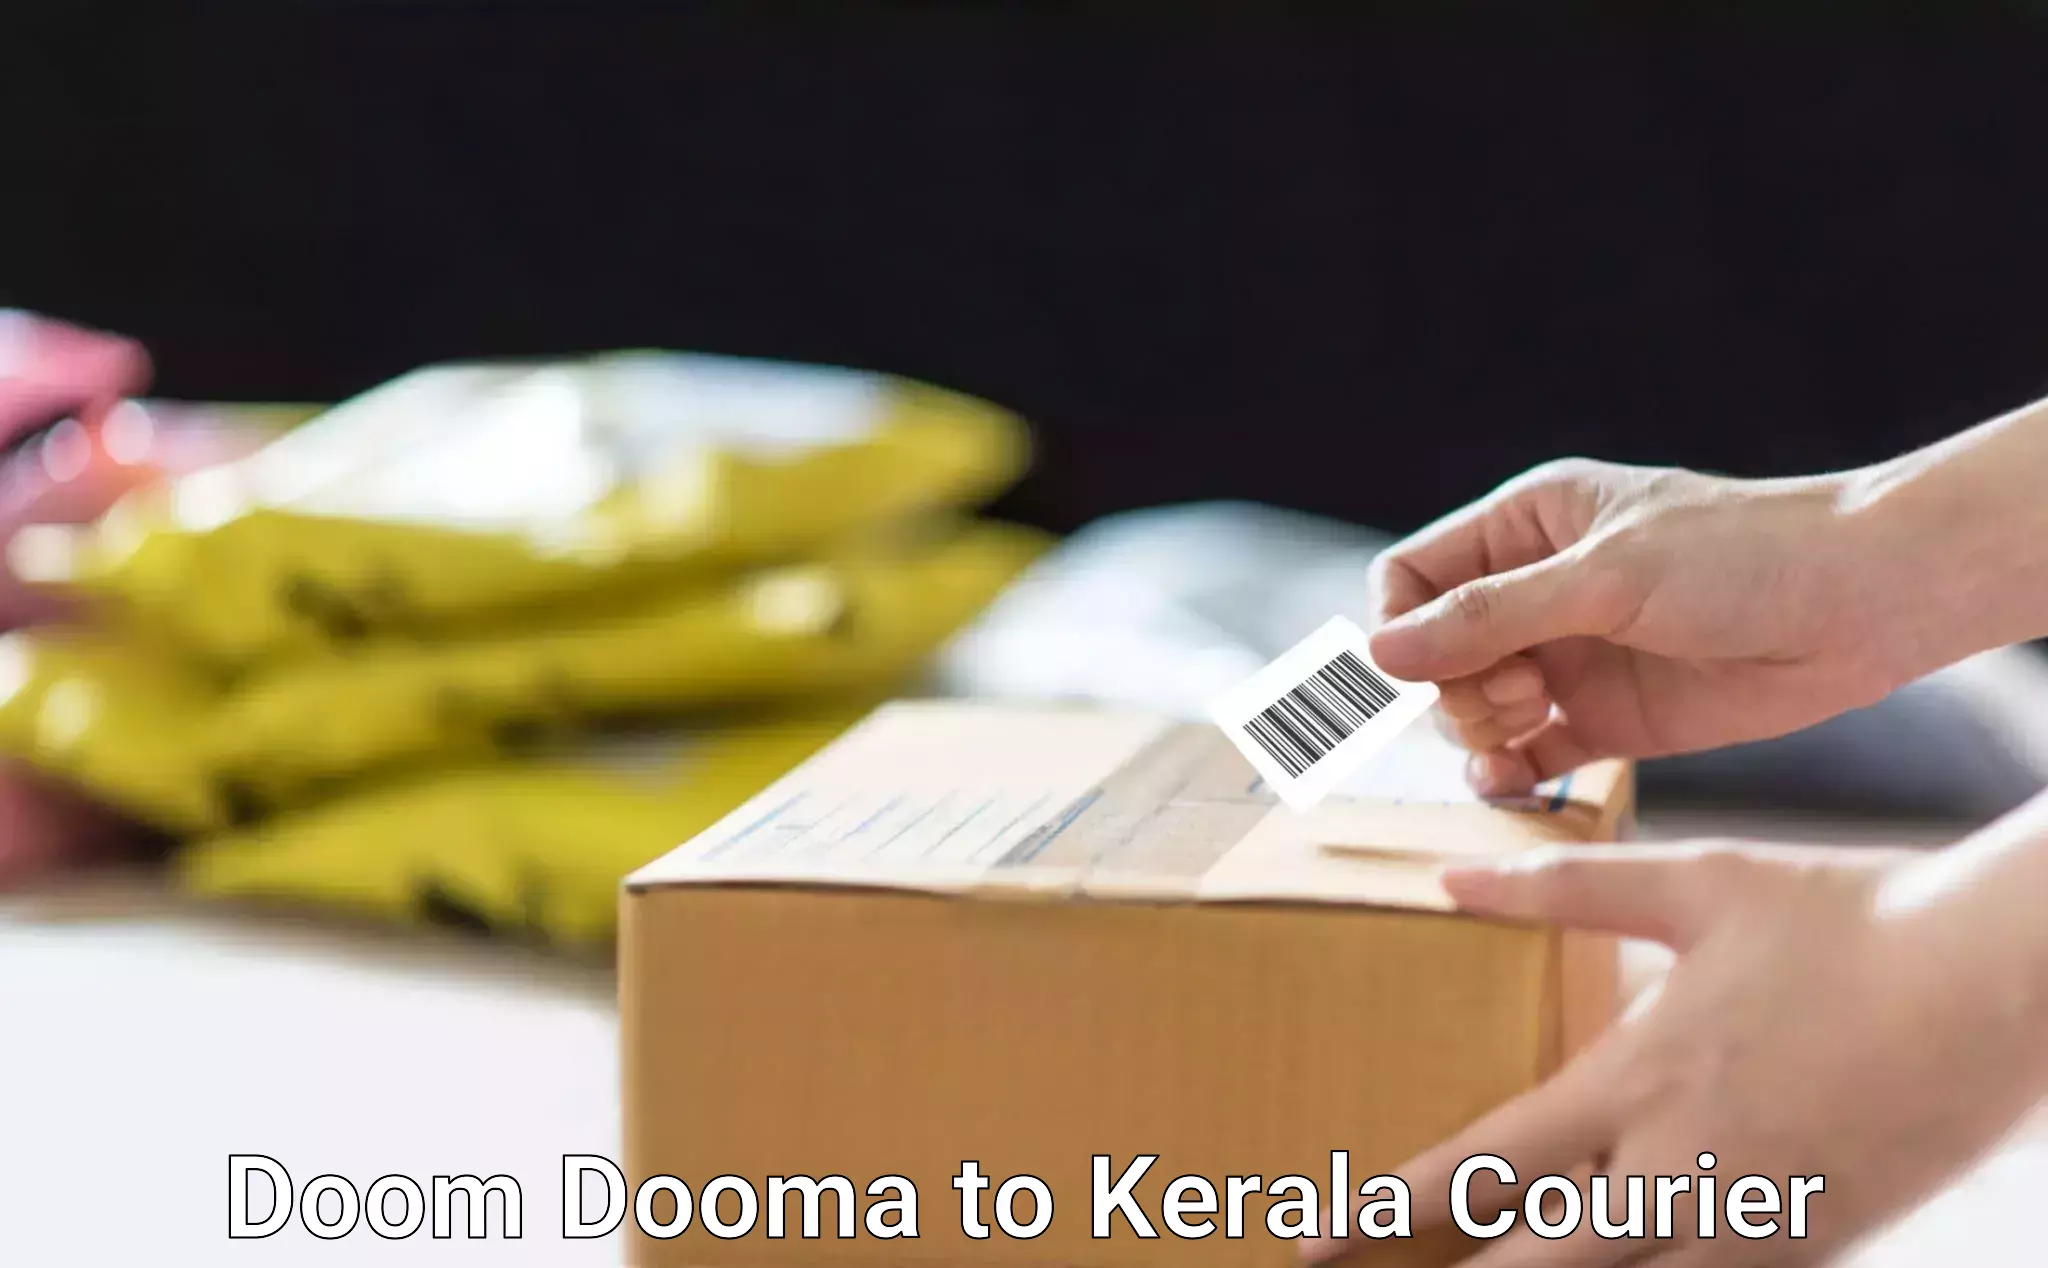 Supply chain delivery Doom Dooma to Kerala